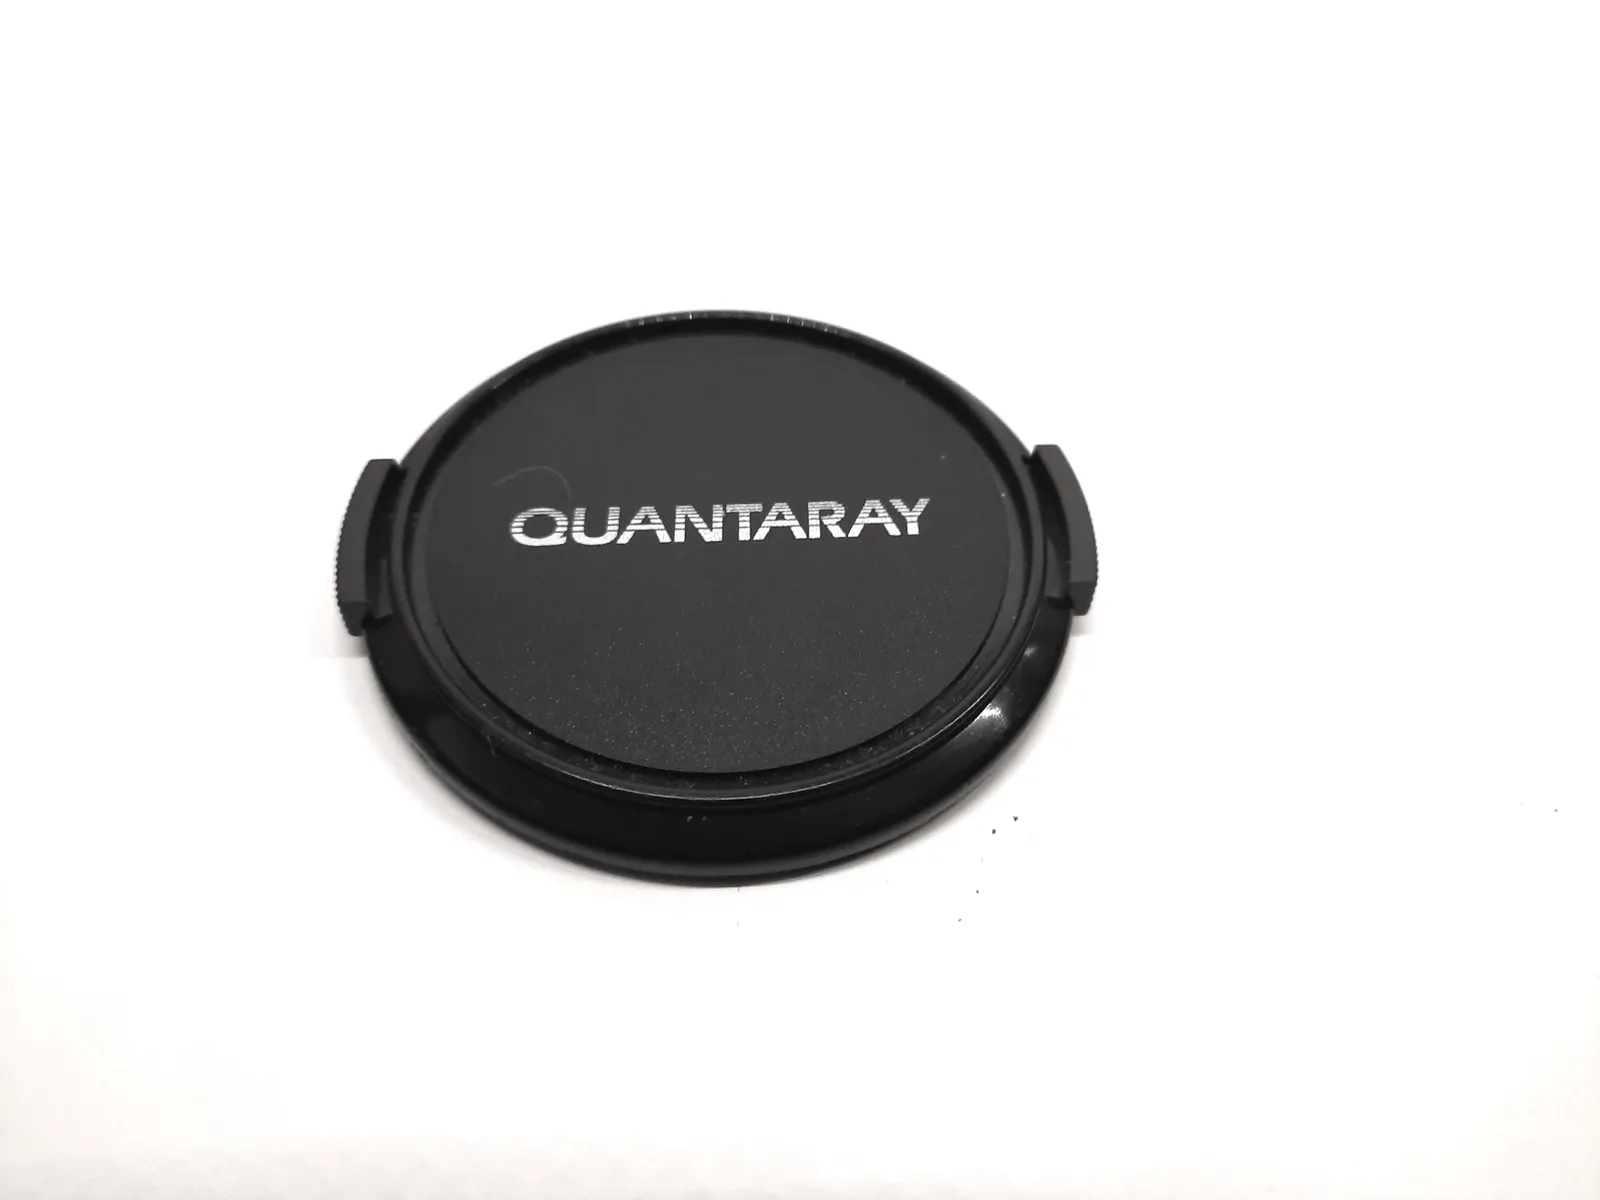 Quantaray 55mm Lens Front Cap snap on for 28-80mm f3.5-5.6 Macro AF at 80mm 1:2